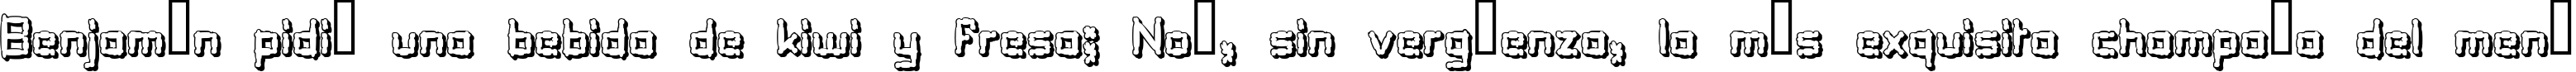 Пример написания шрифтом Pillo Talk Soft текста на испанском